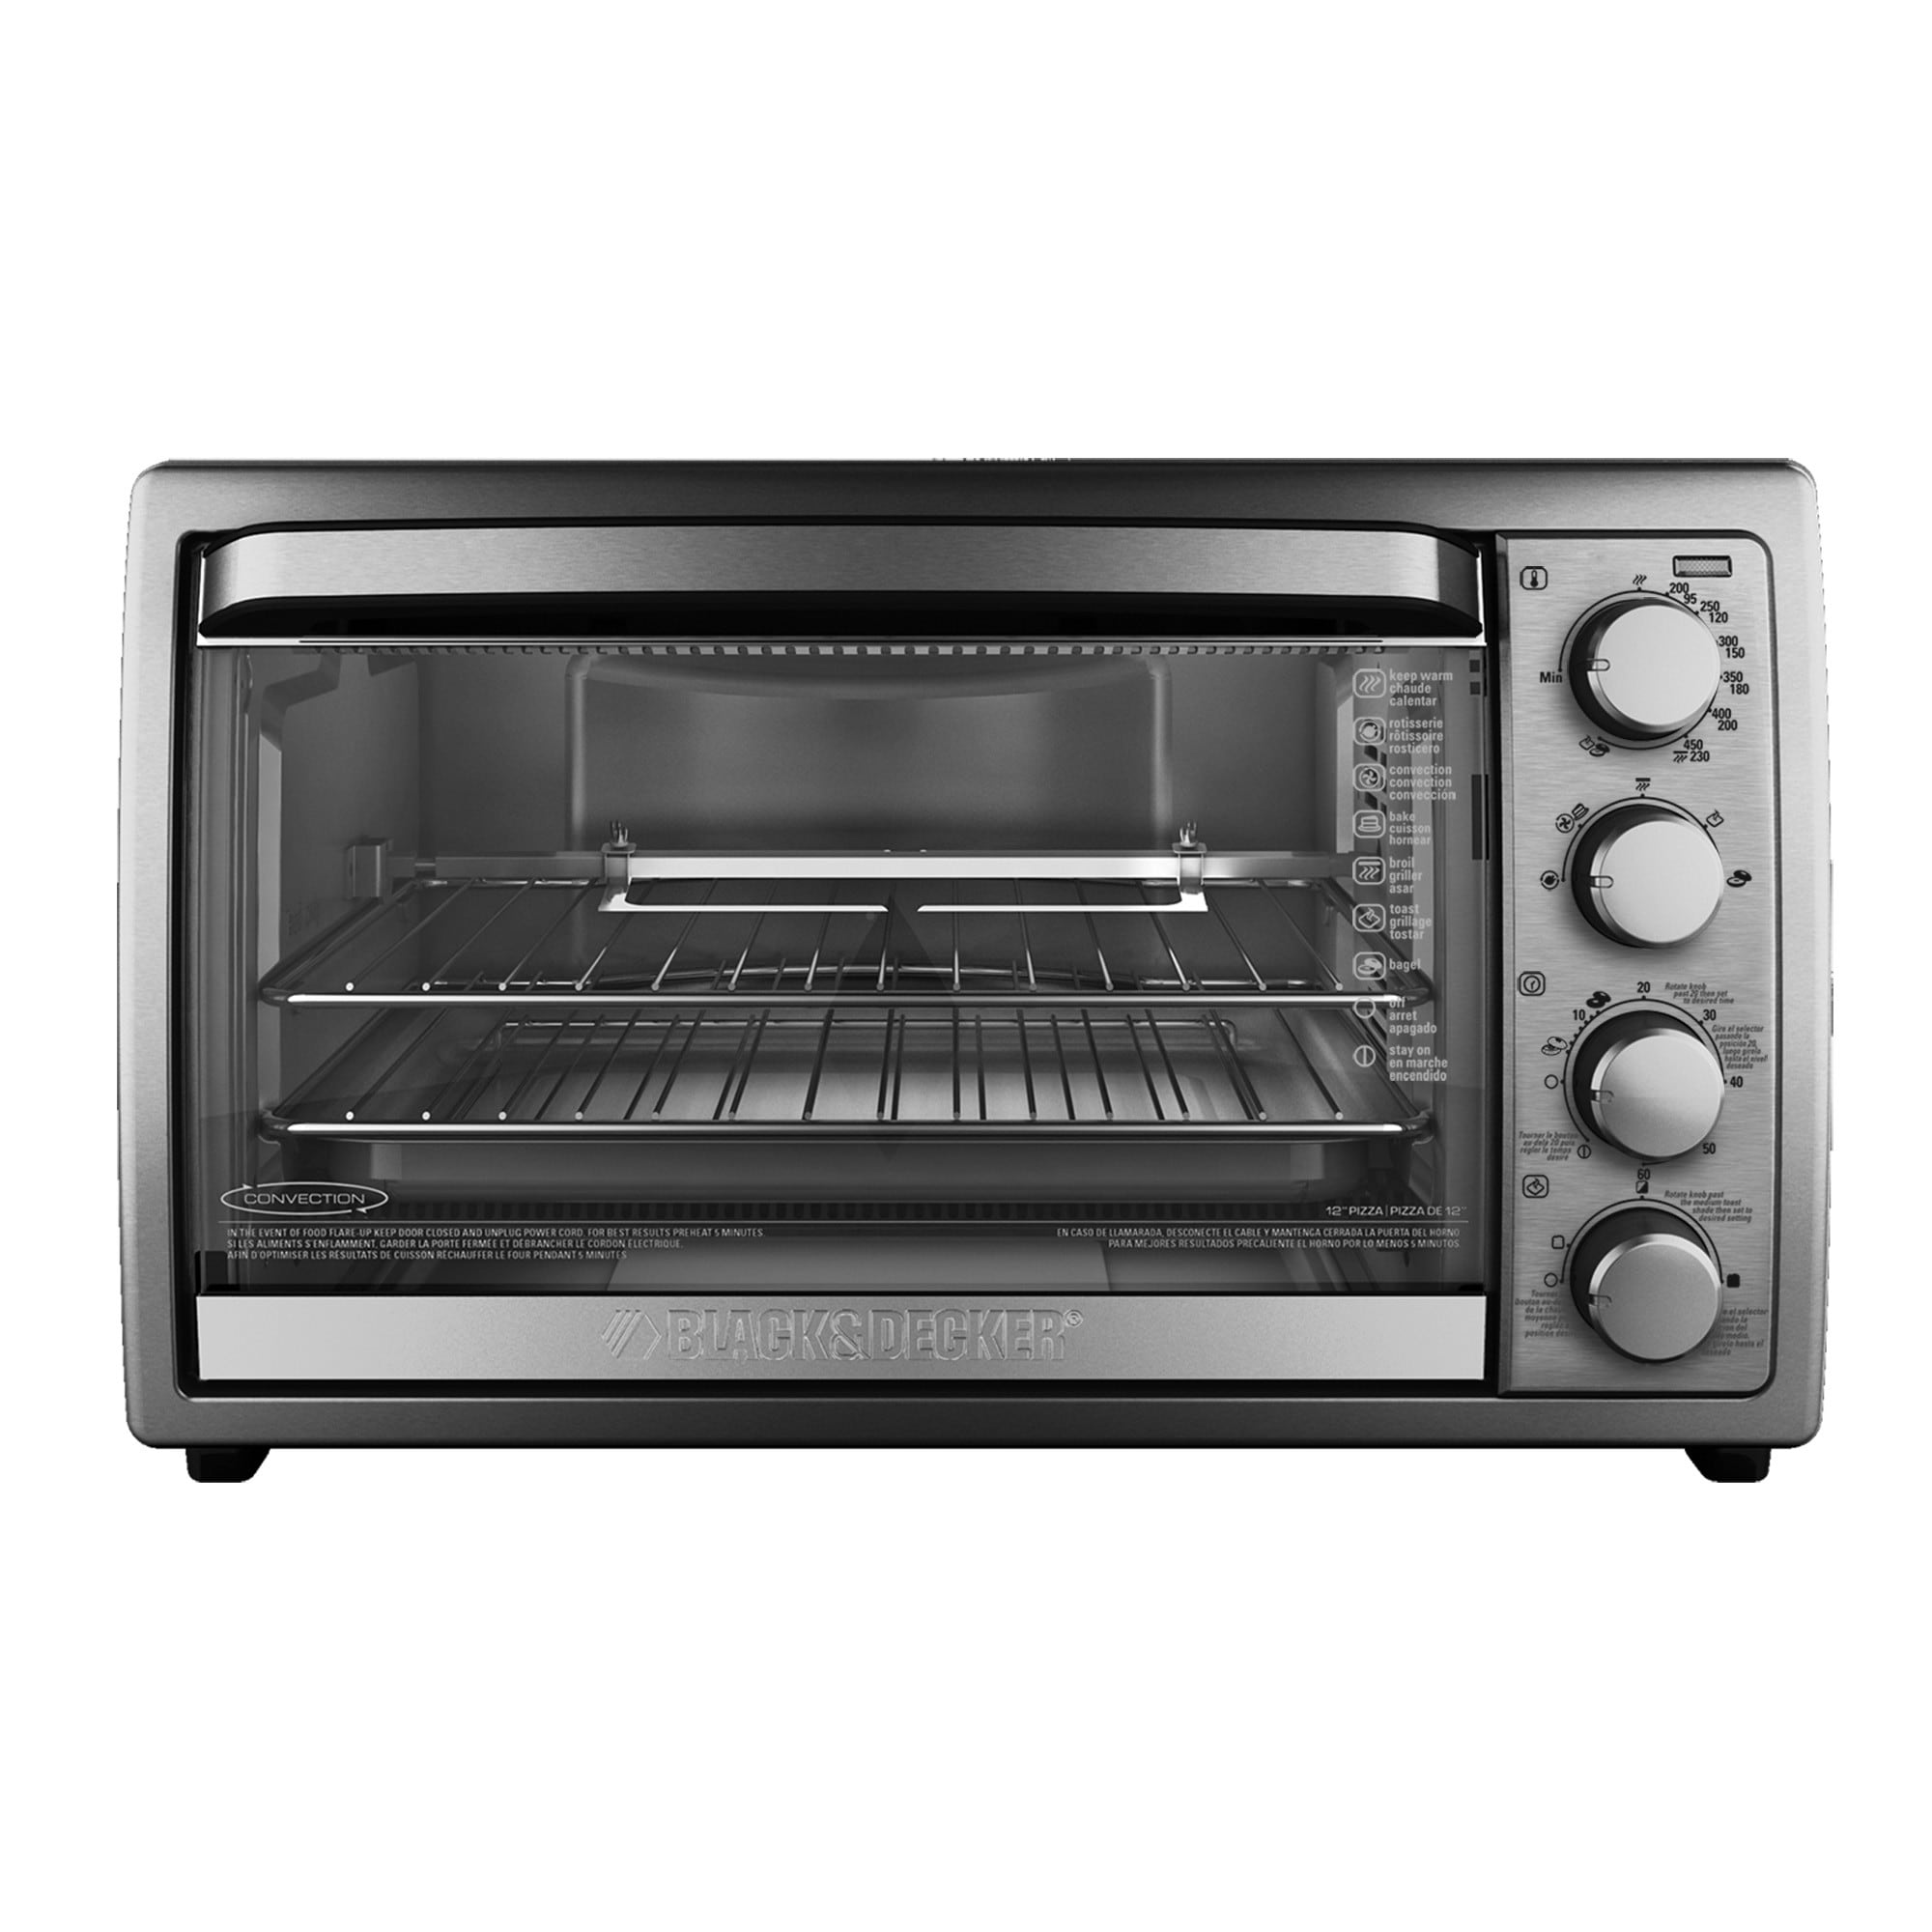 Black Decker Convection Countertop 12 Pizza Bake Broil Toaster Oven